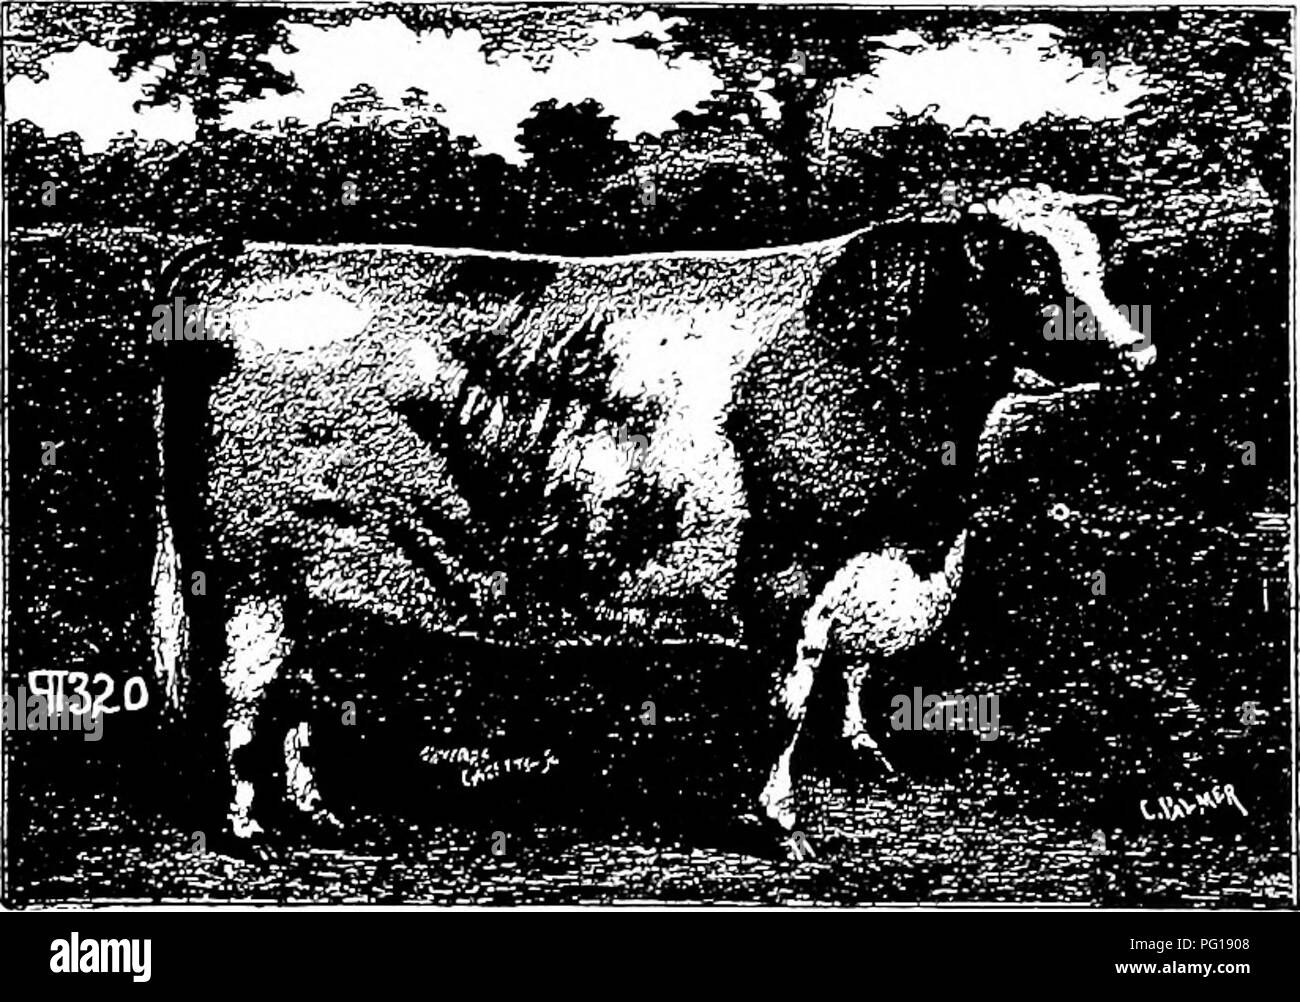 Texan sheep Black and White Stock Photos & Images - Alamy